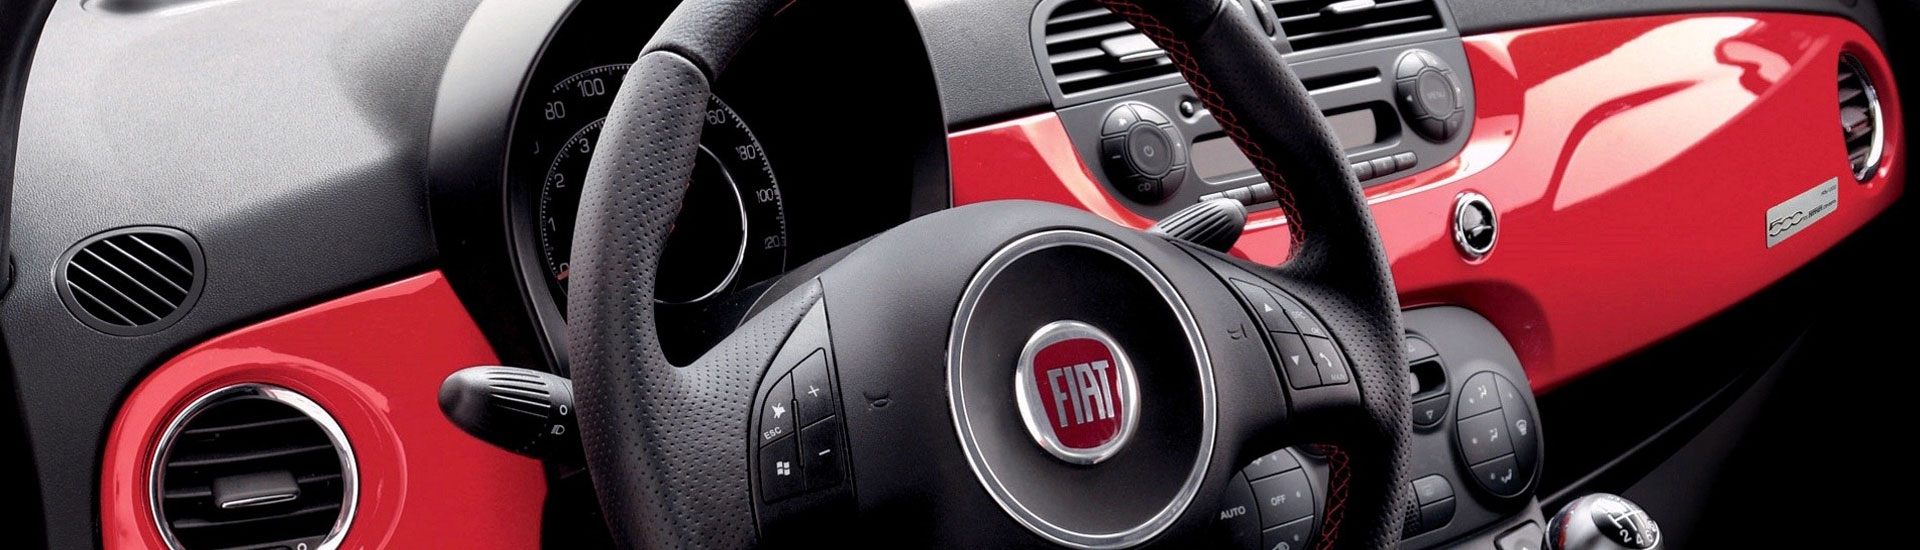 2016 Fiat 500x Custom Dash Kits